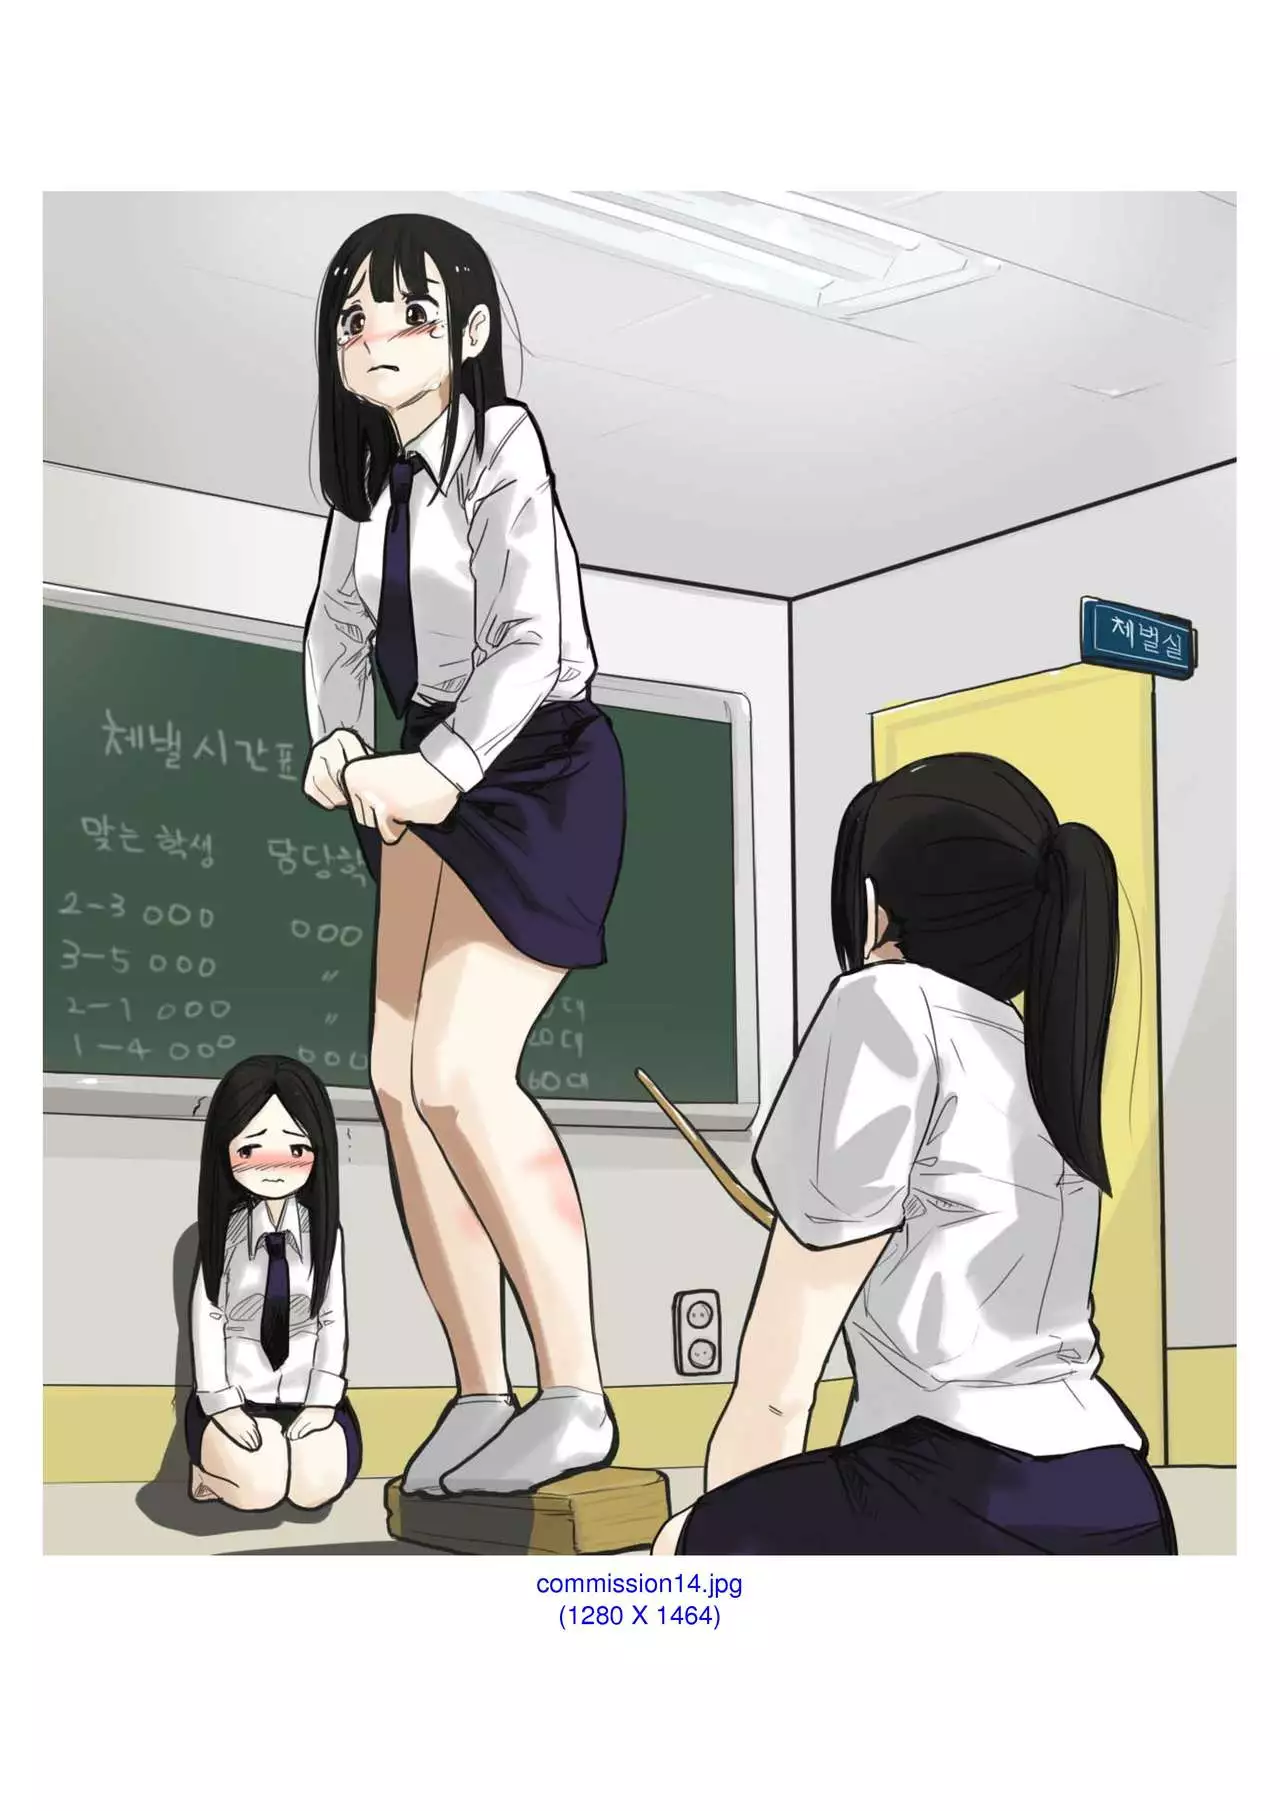 Japanese anime spanking